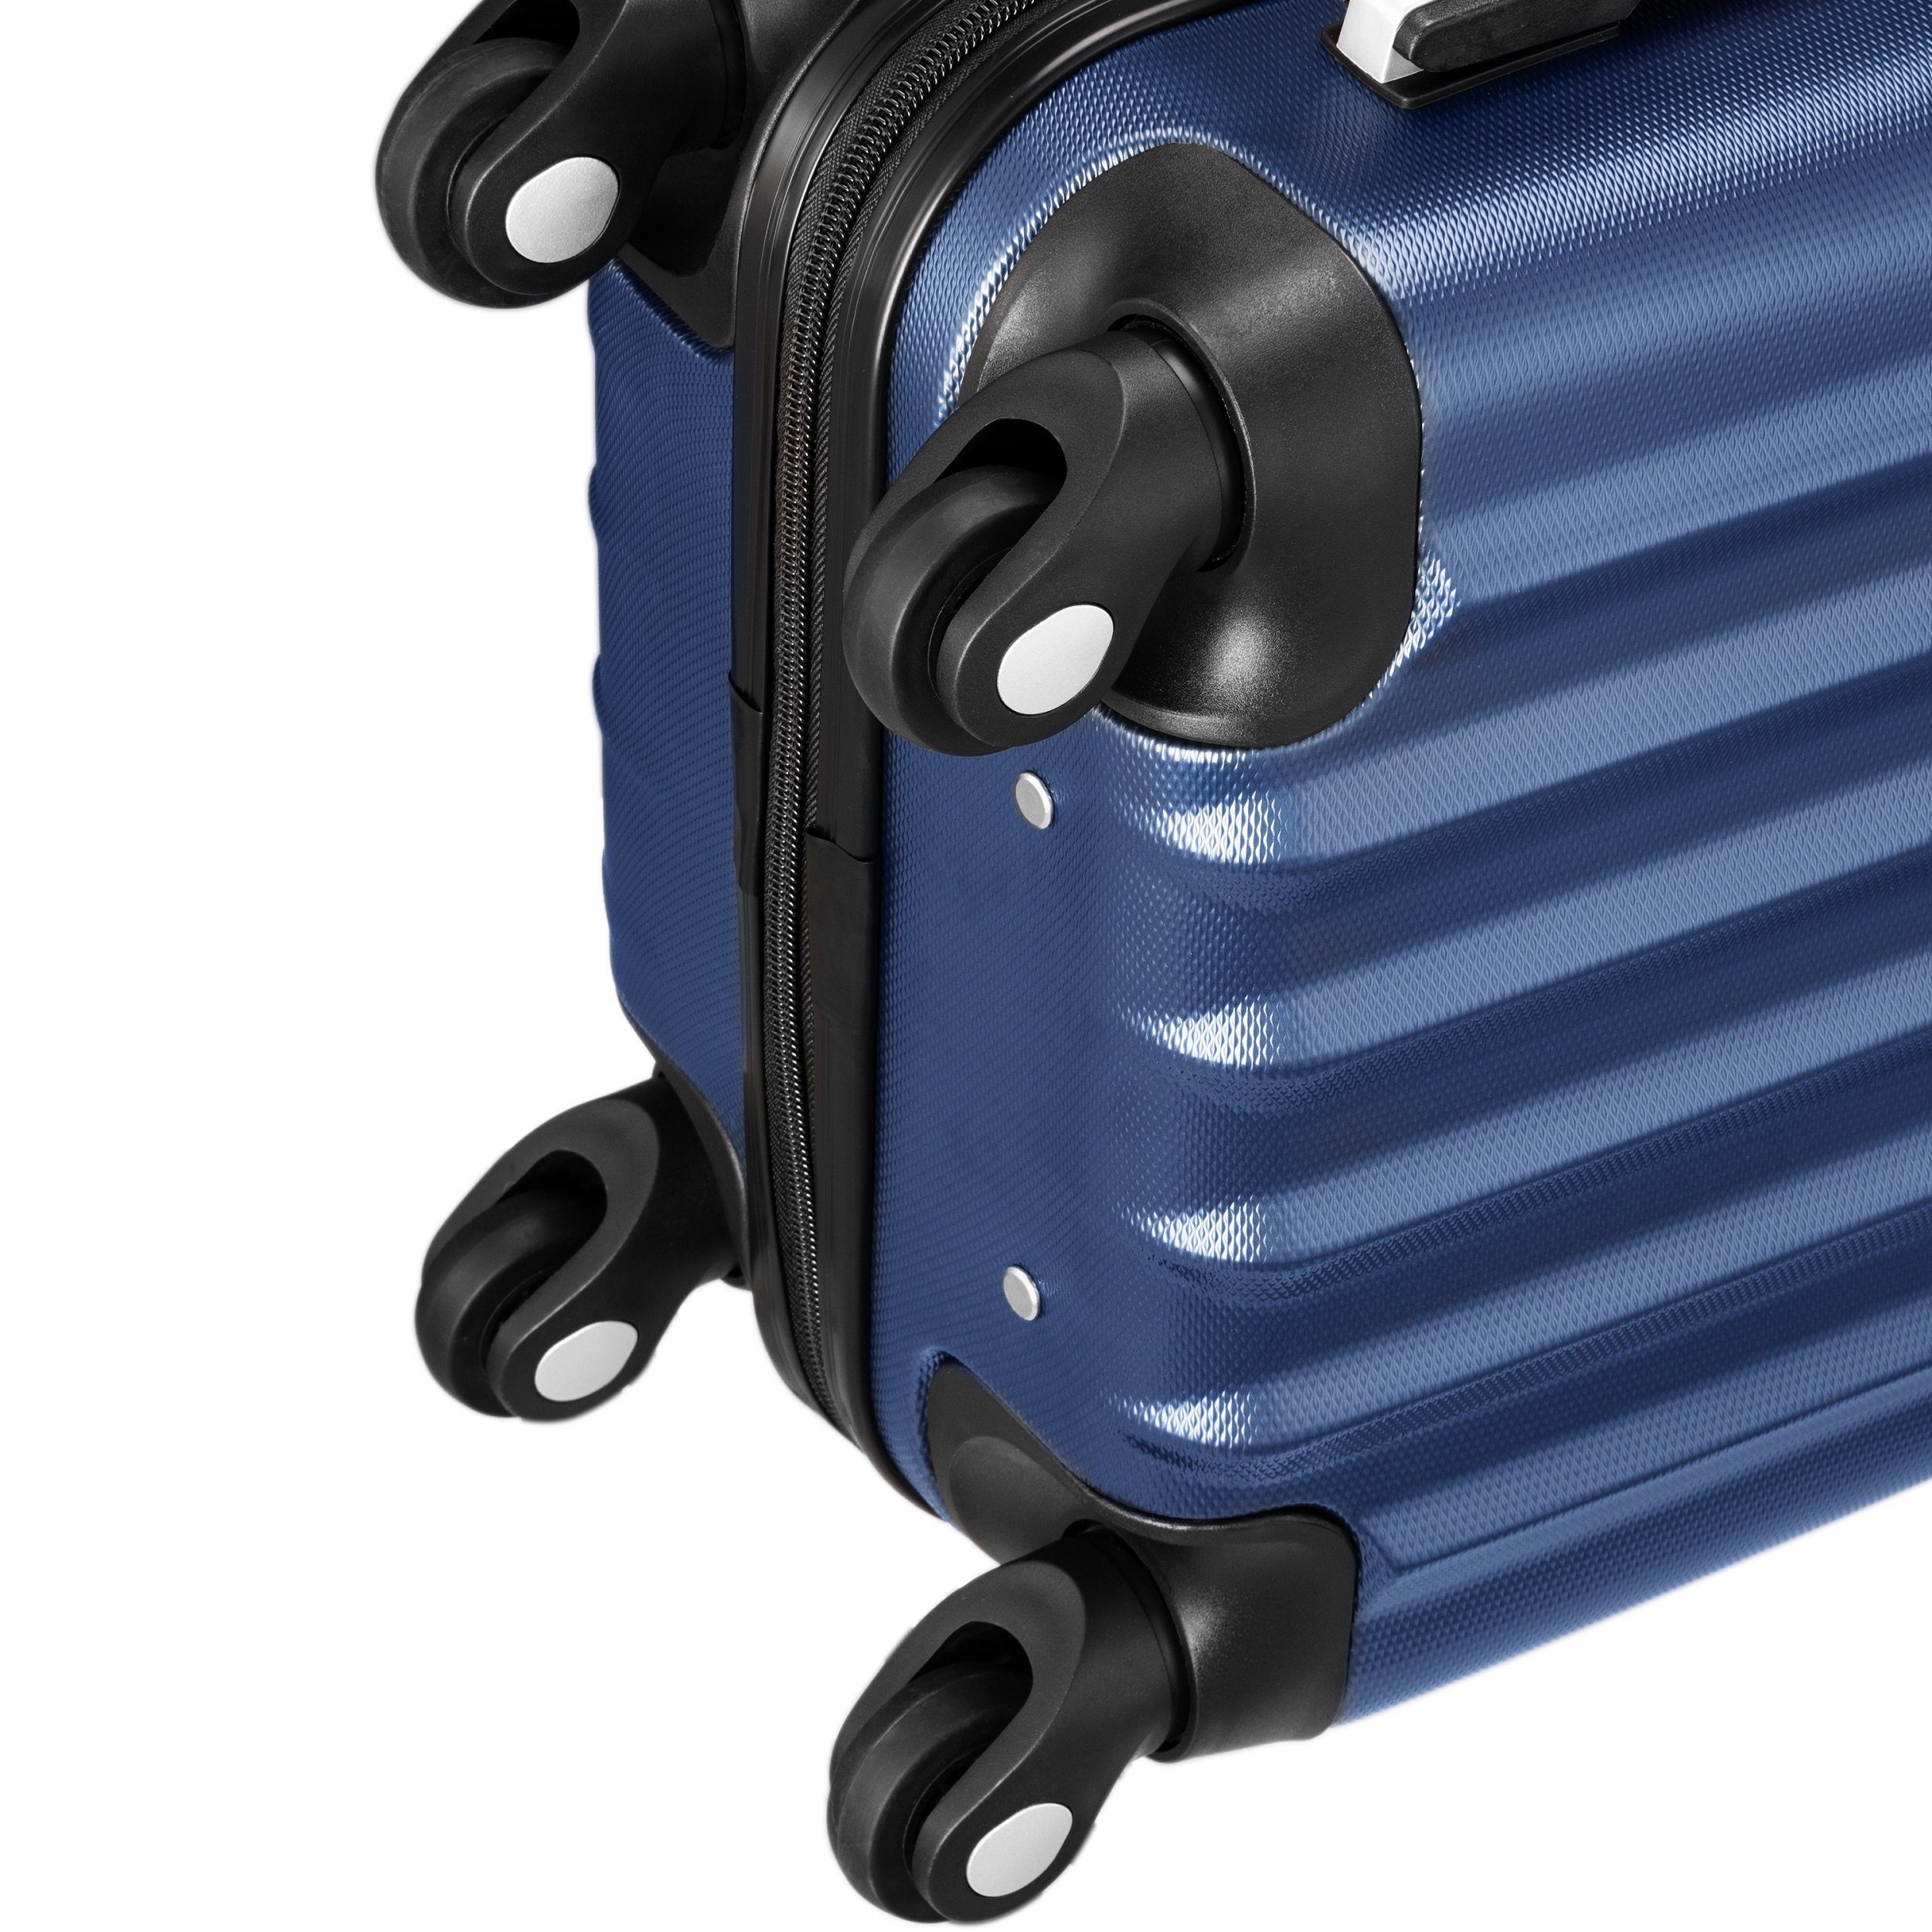 KOFFER-BARON* Koffer Trolley Hartschalenkoffer ABS, Reisegepäck XL naviblau Basic